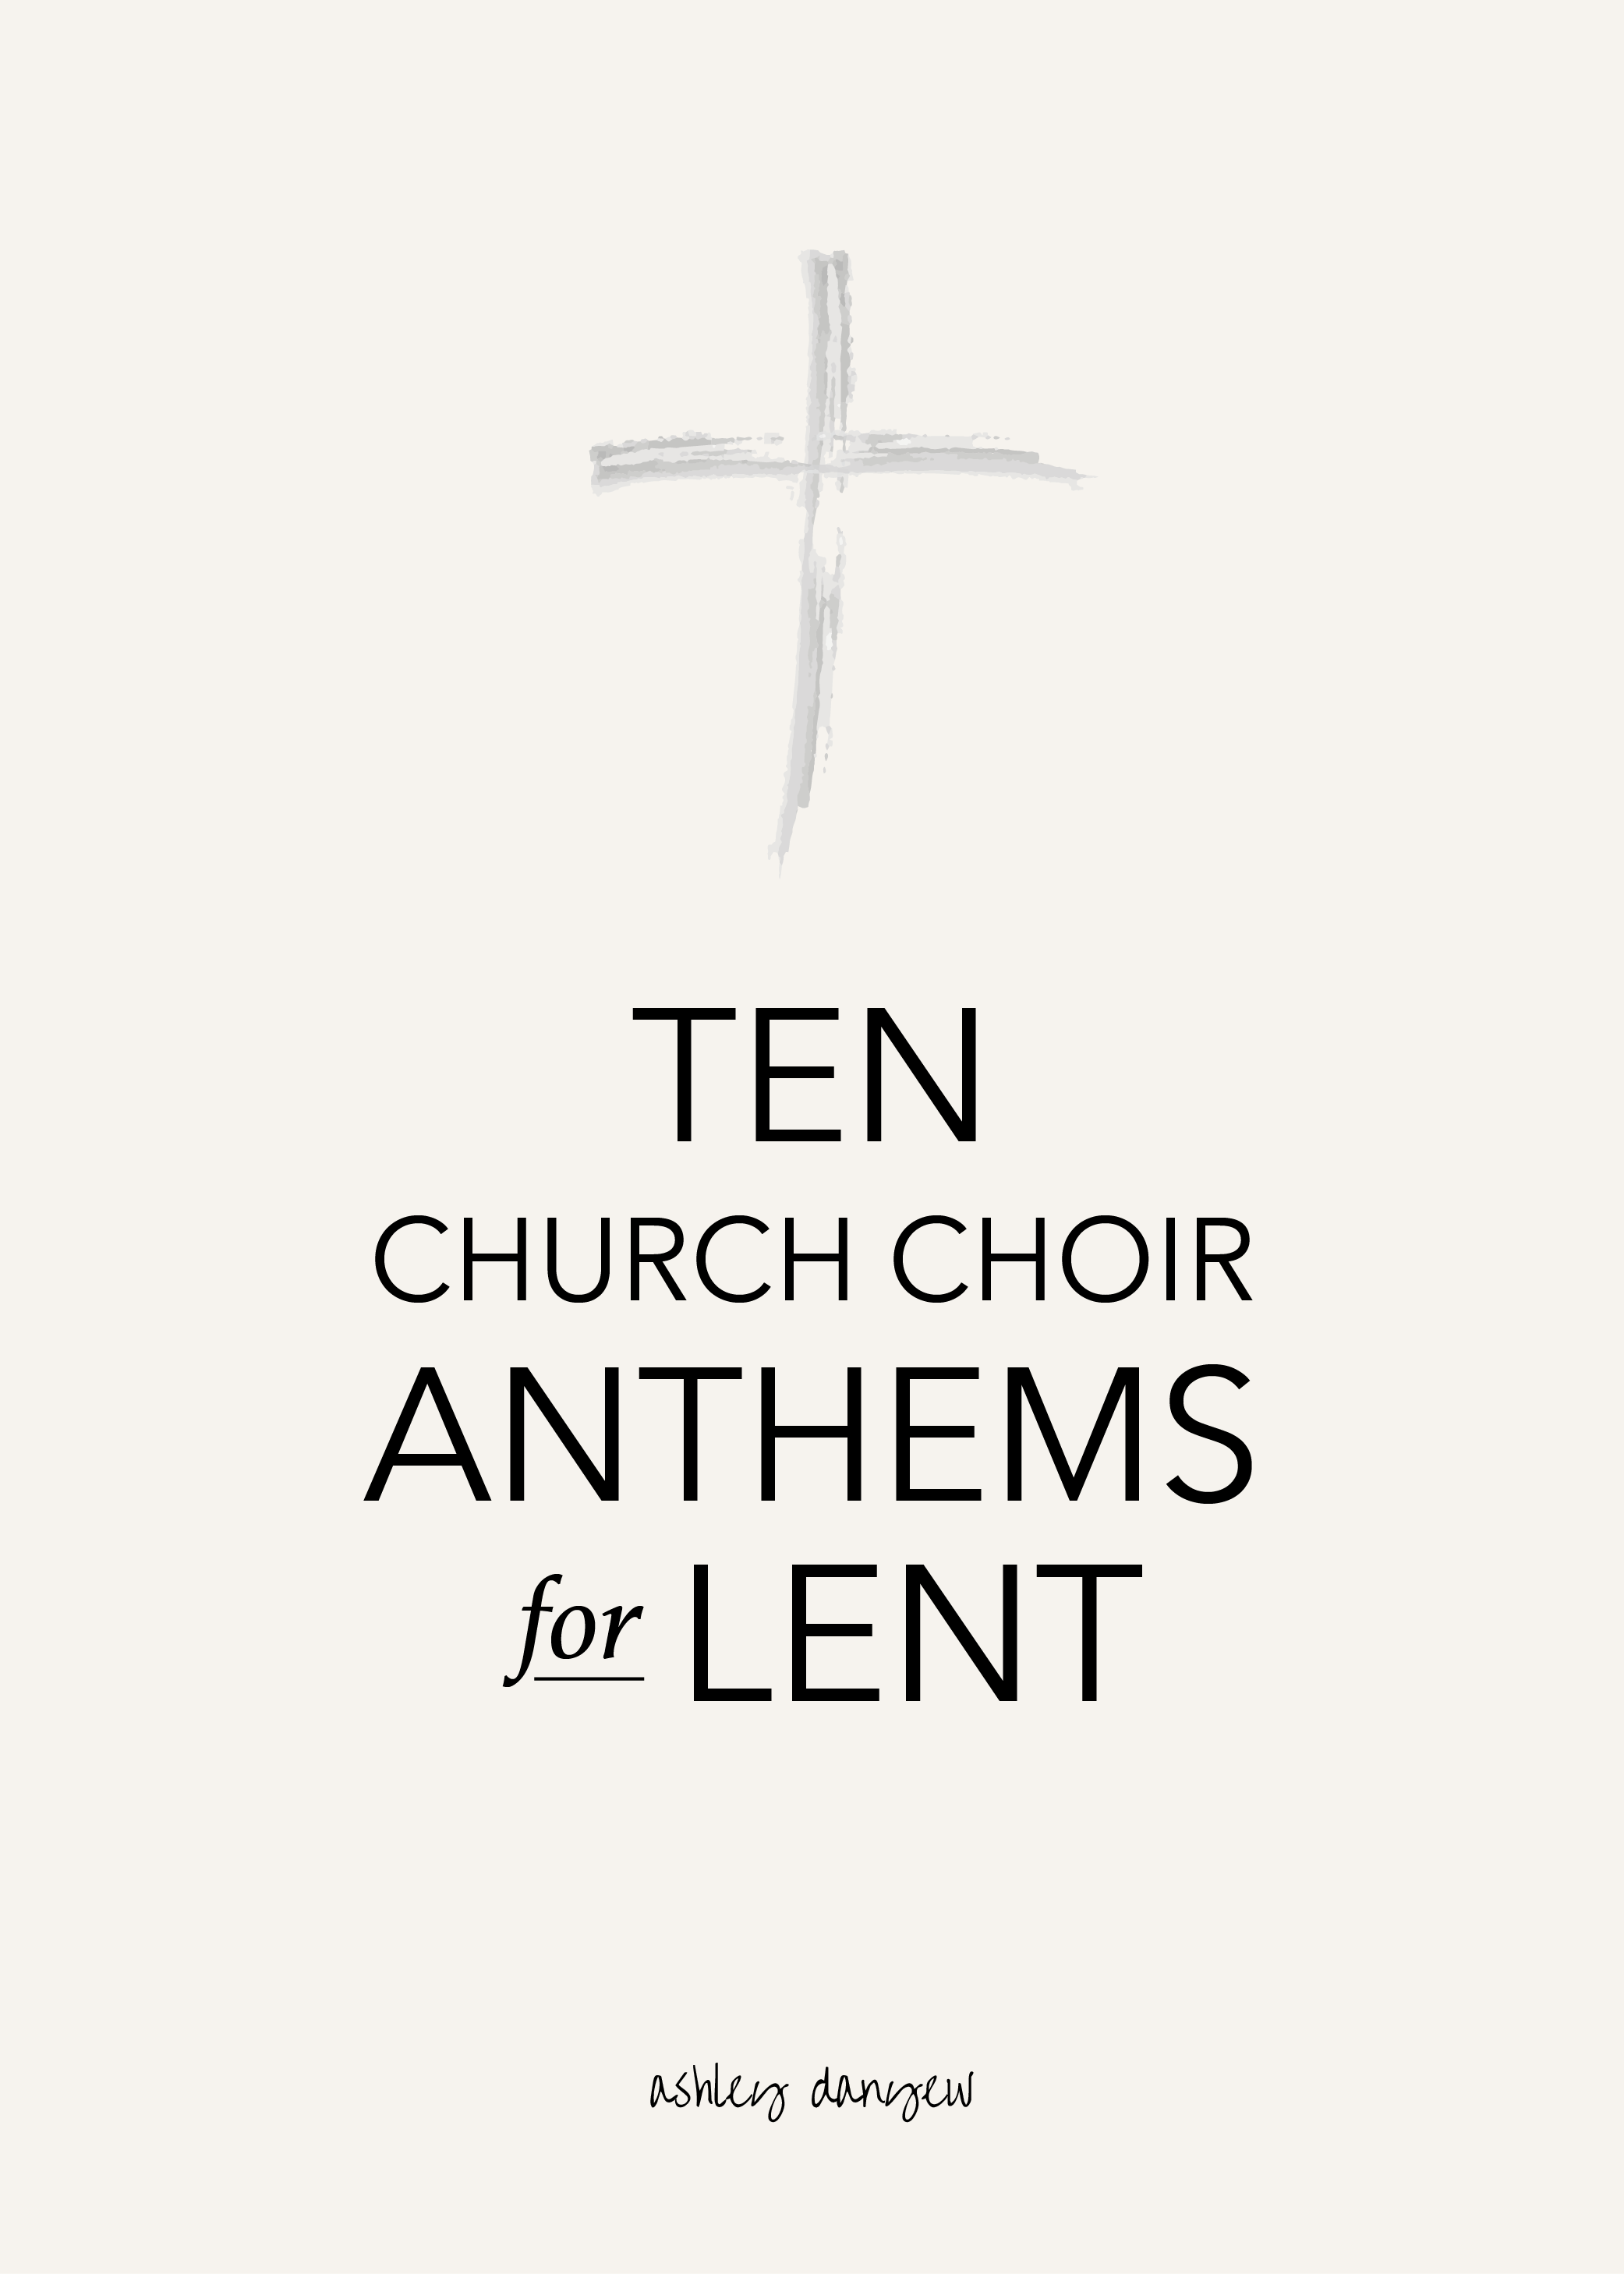 Copy of 10 Church Choir Anthems for Lent